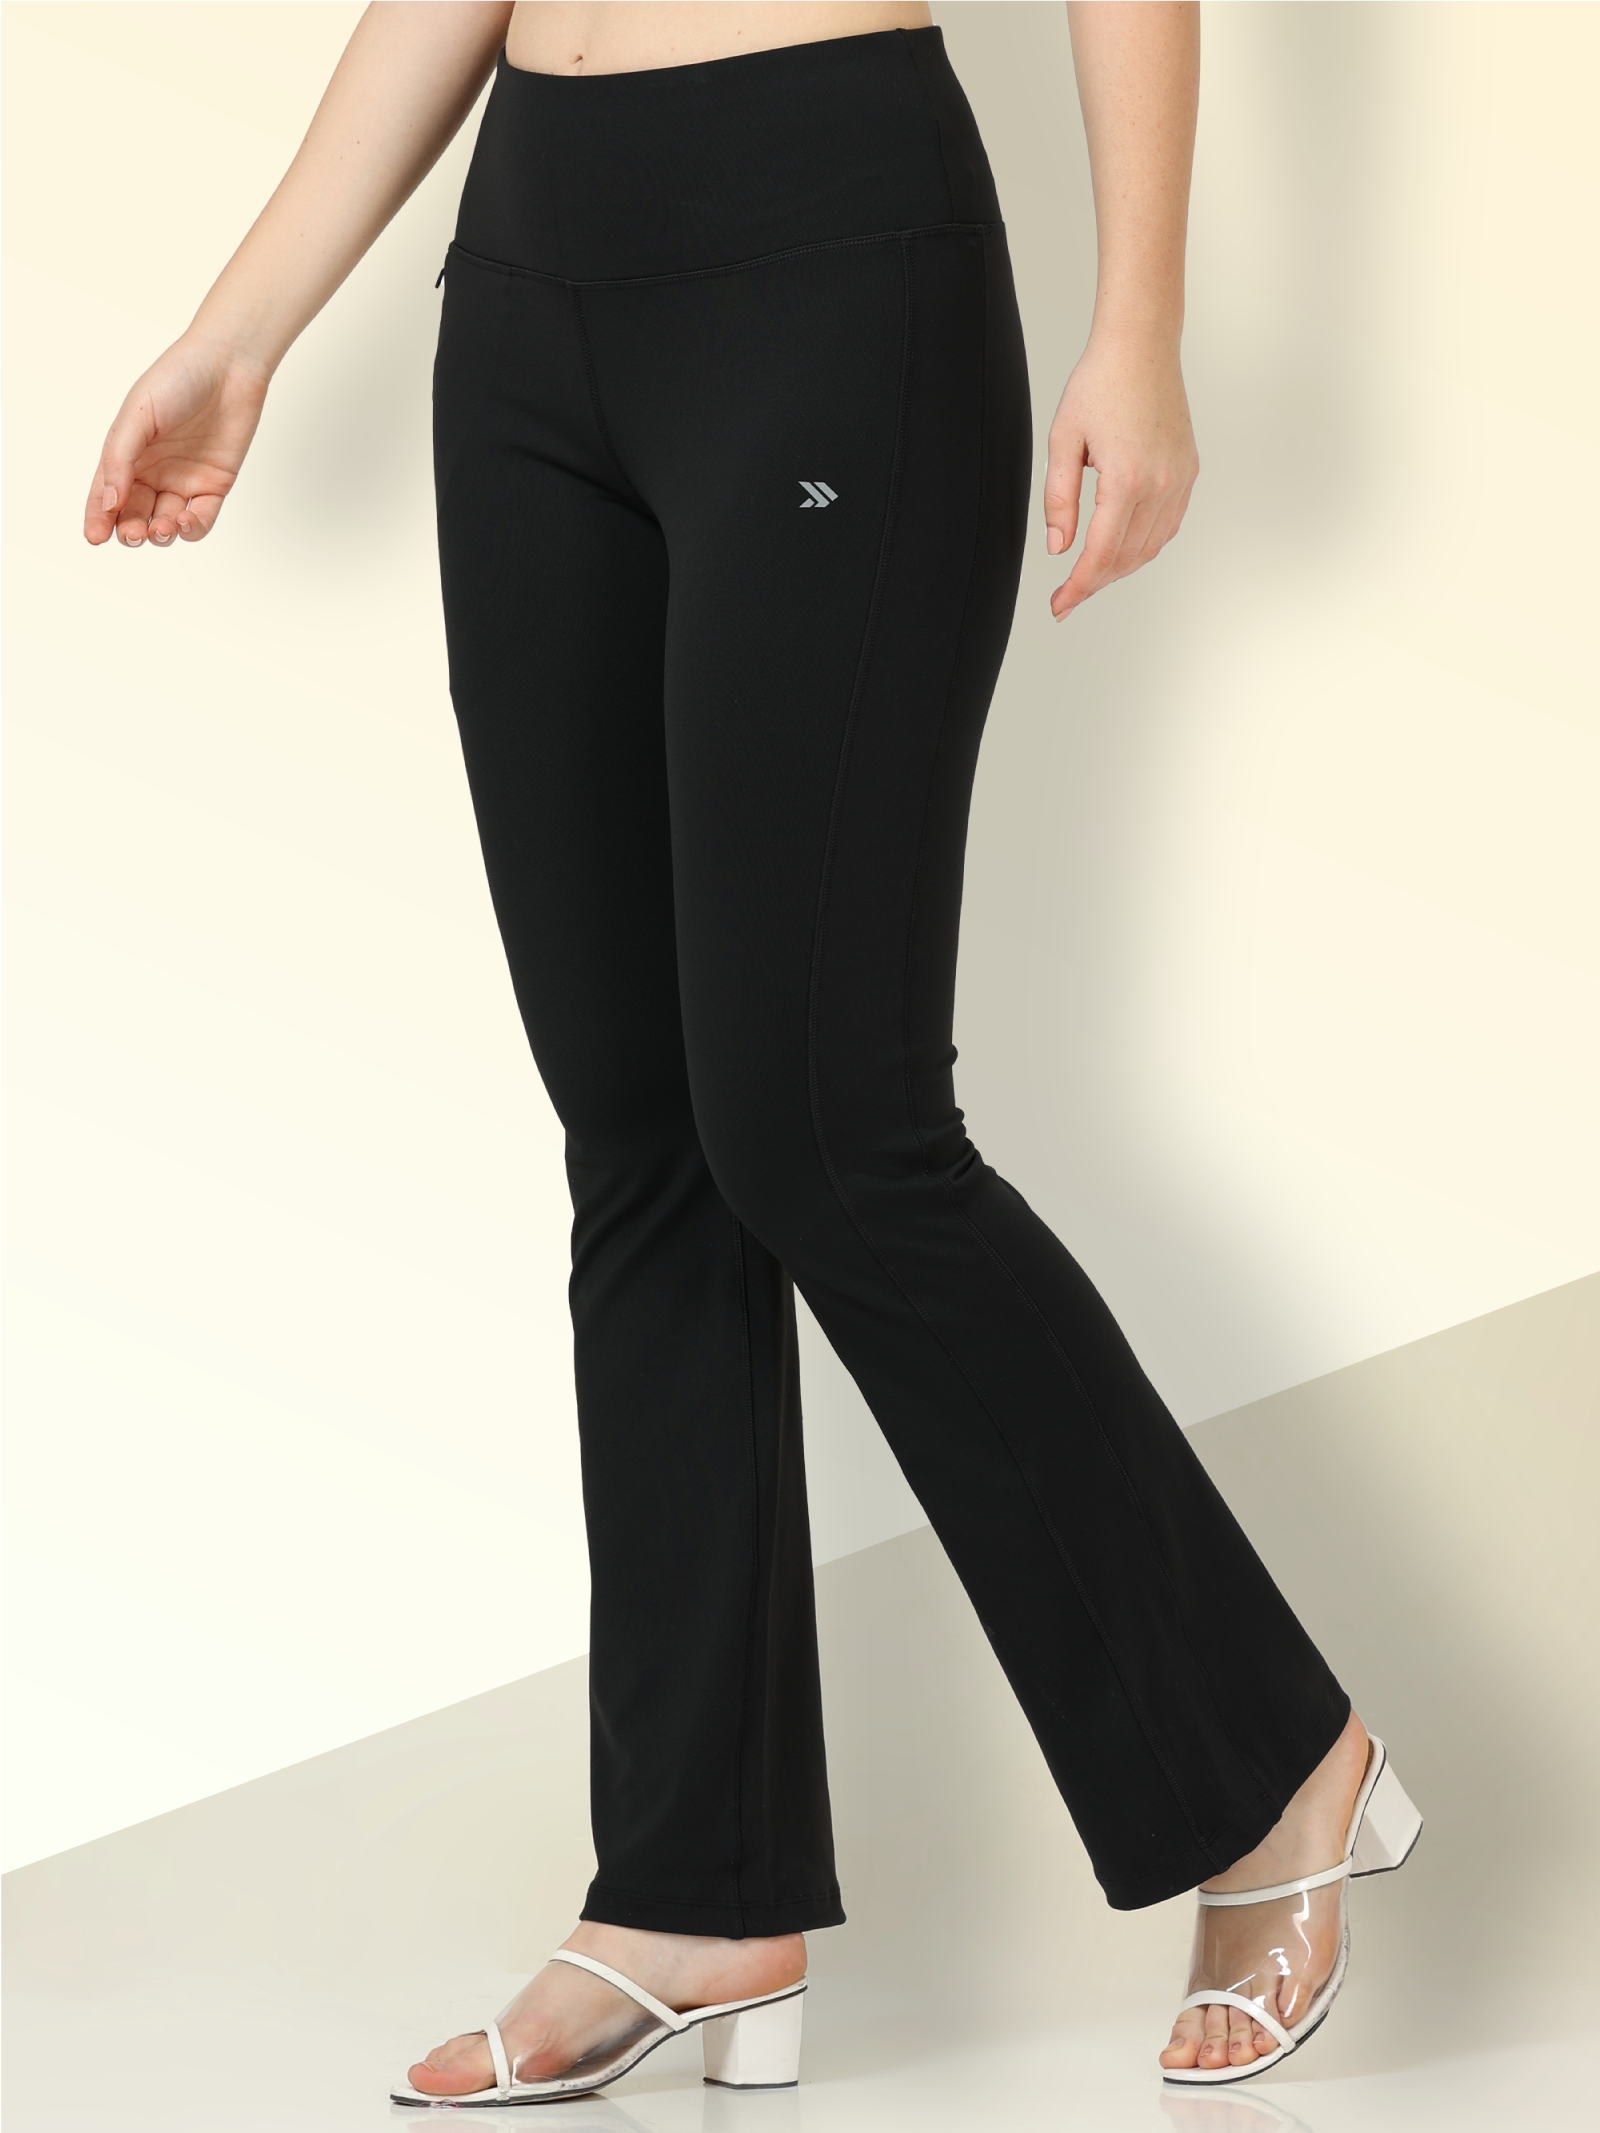 Jockey Women's Activewear Cotton Stretch Capri Legging, Black, M